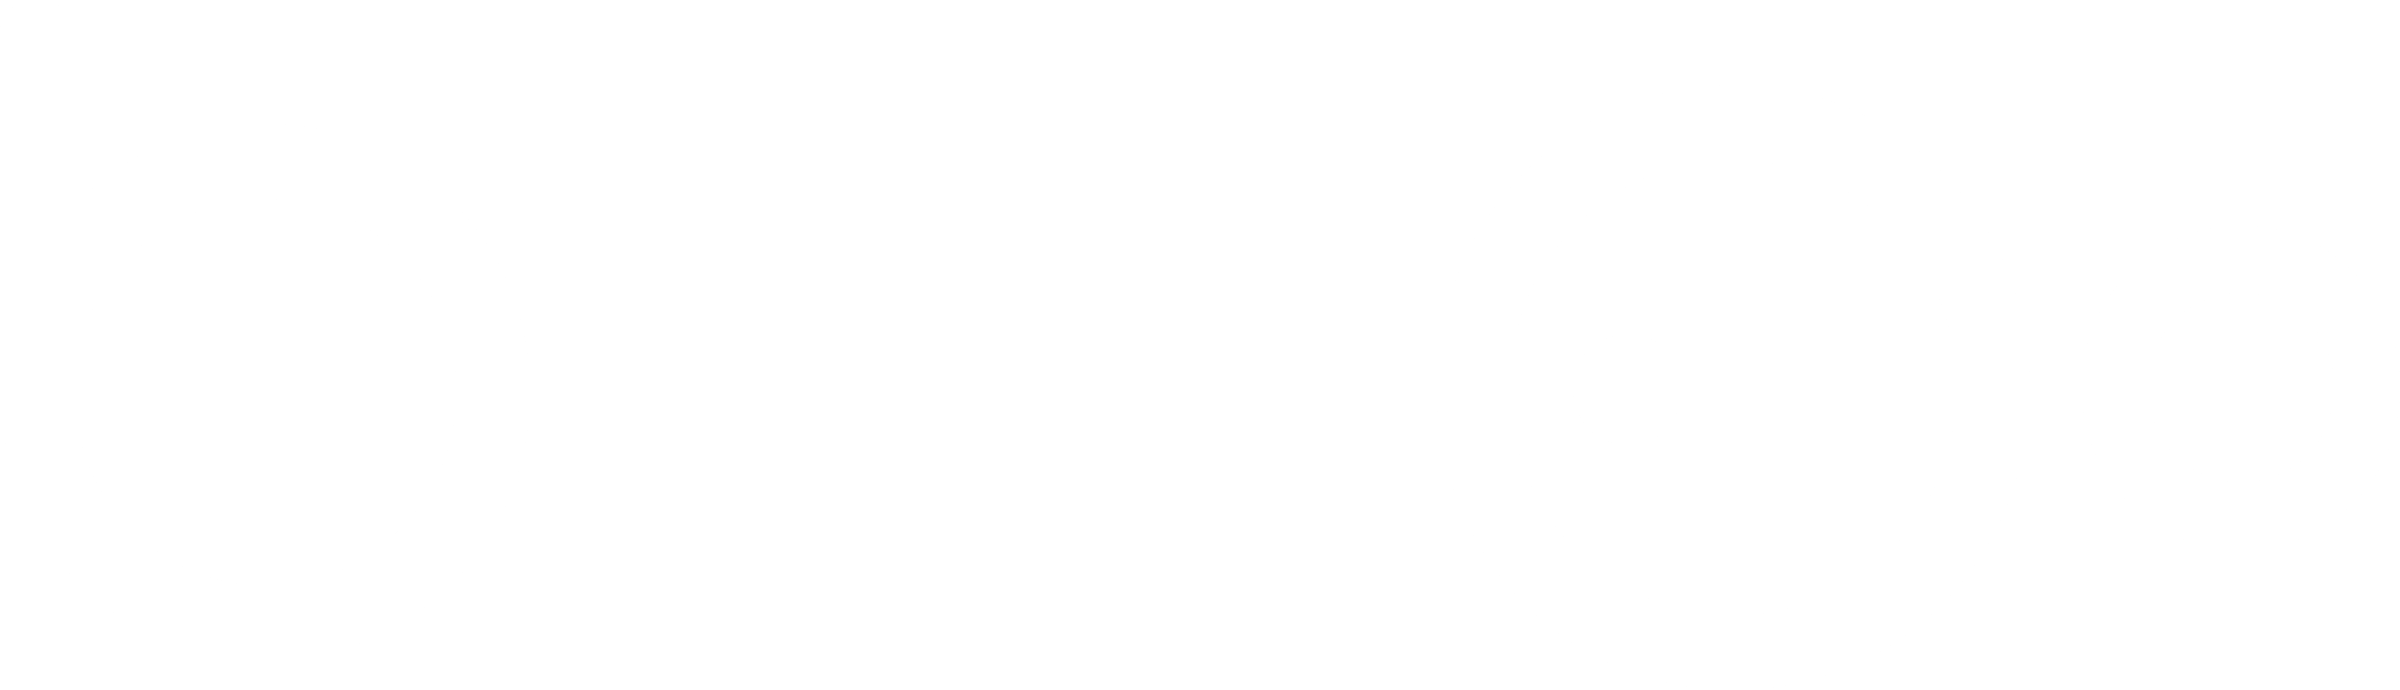 Badoo Logo - Badoo Logo PNG Transparent & SVG Vector